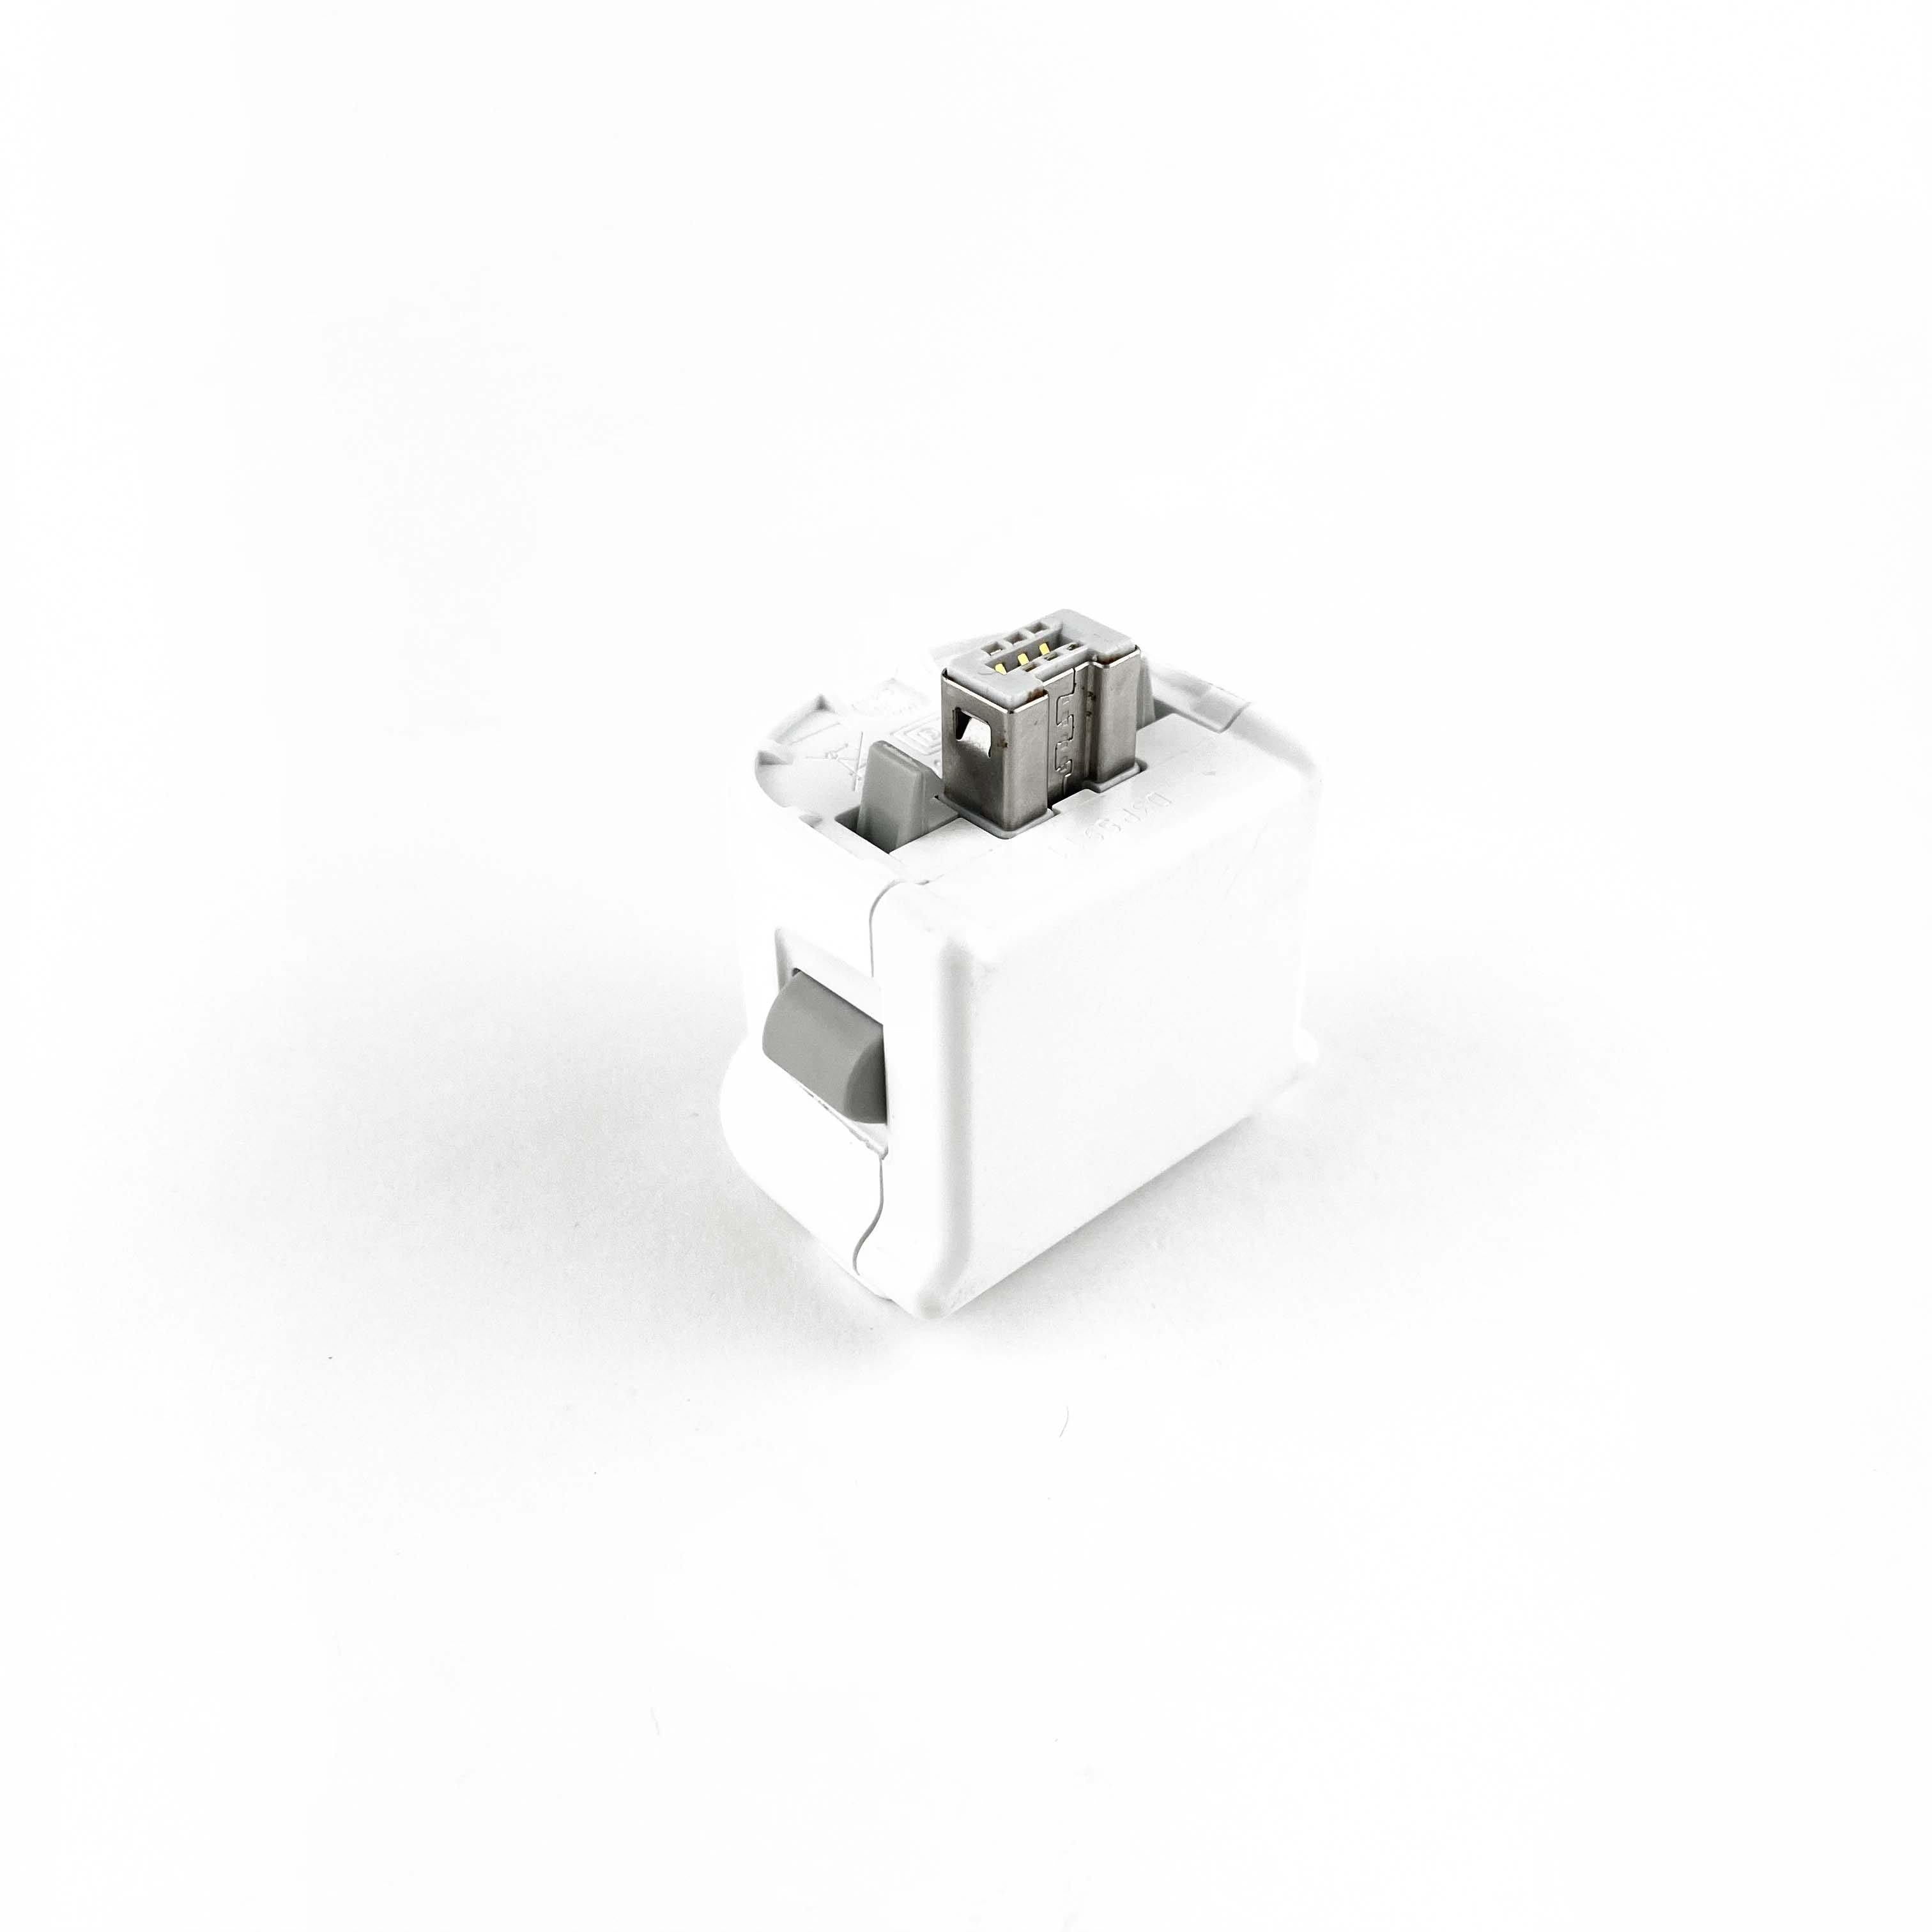 Nintendo Wii Motion Plus Attachment Adapter White (RVL-026)